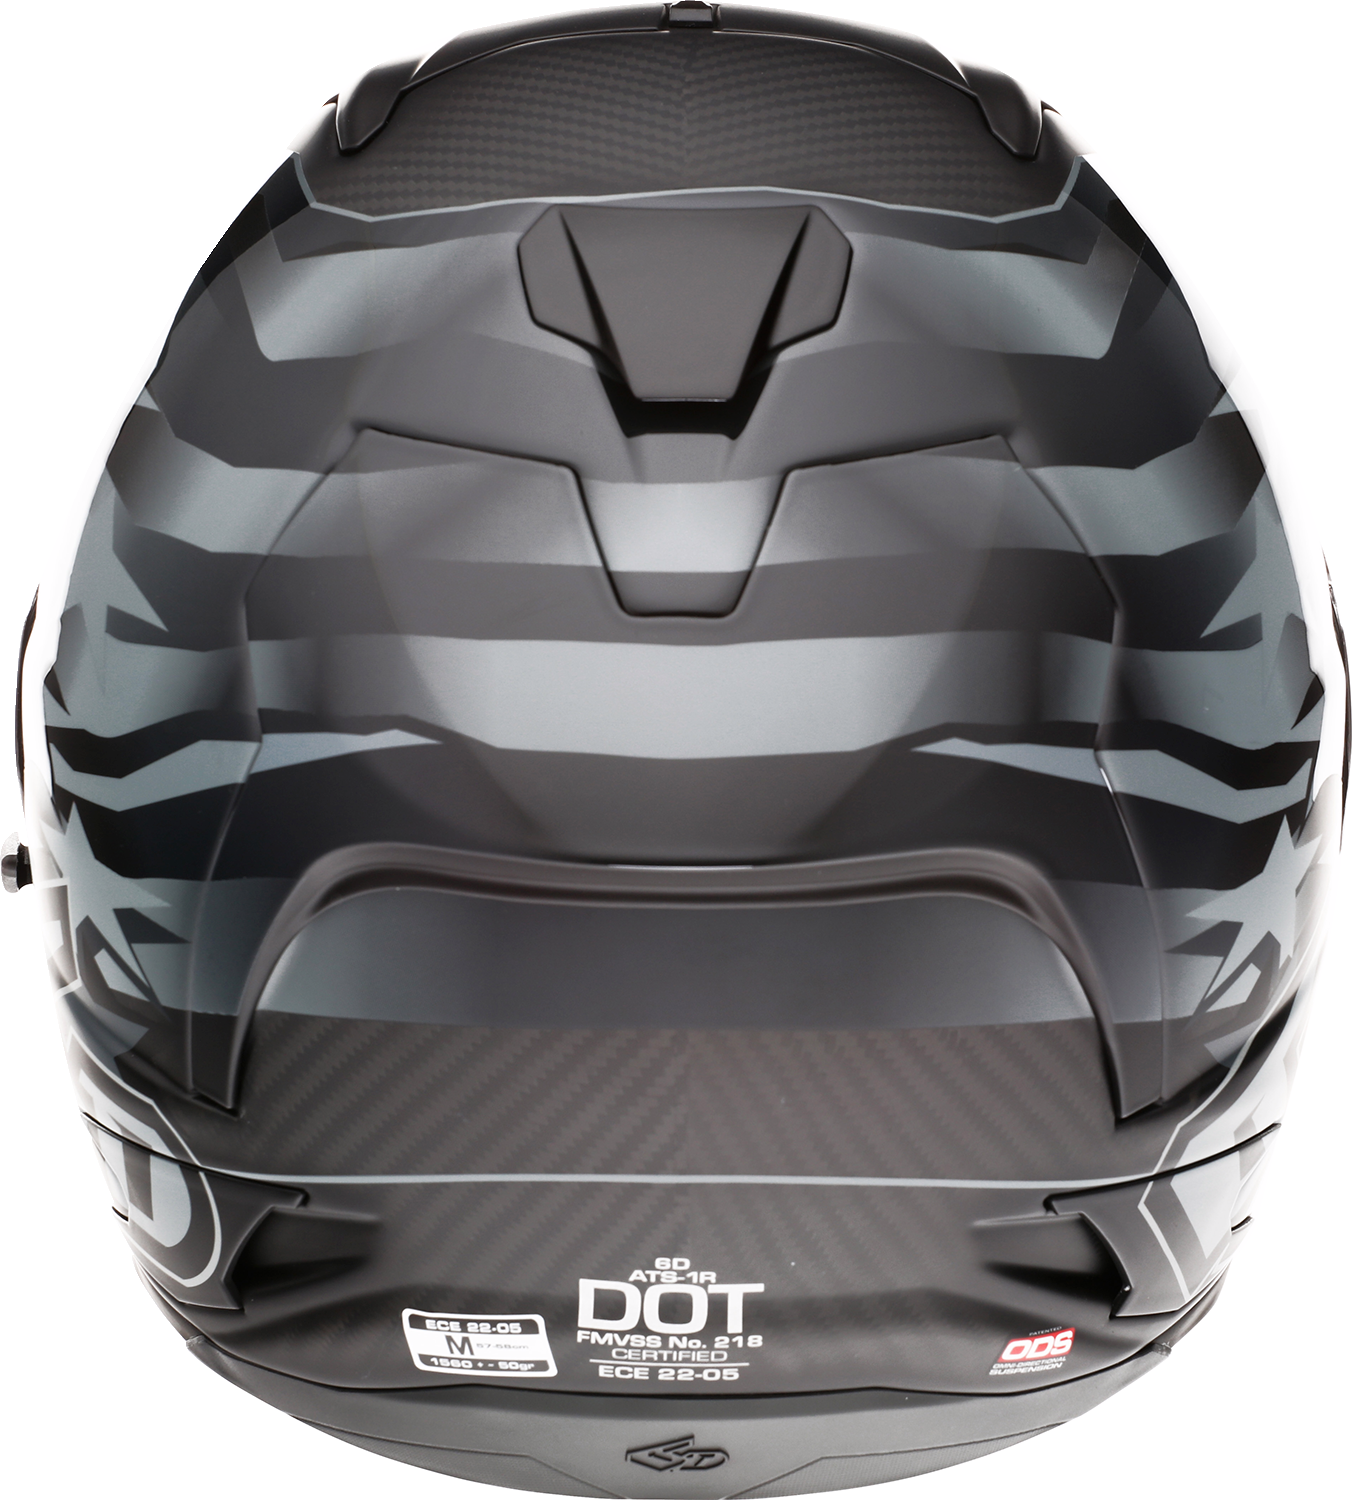 6D ATS-1R Helmet - Patriot - Black - Medium 30-0606